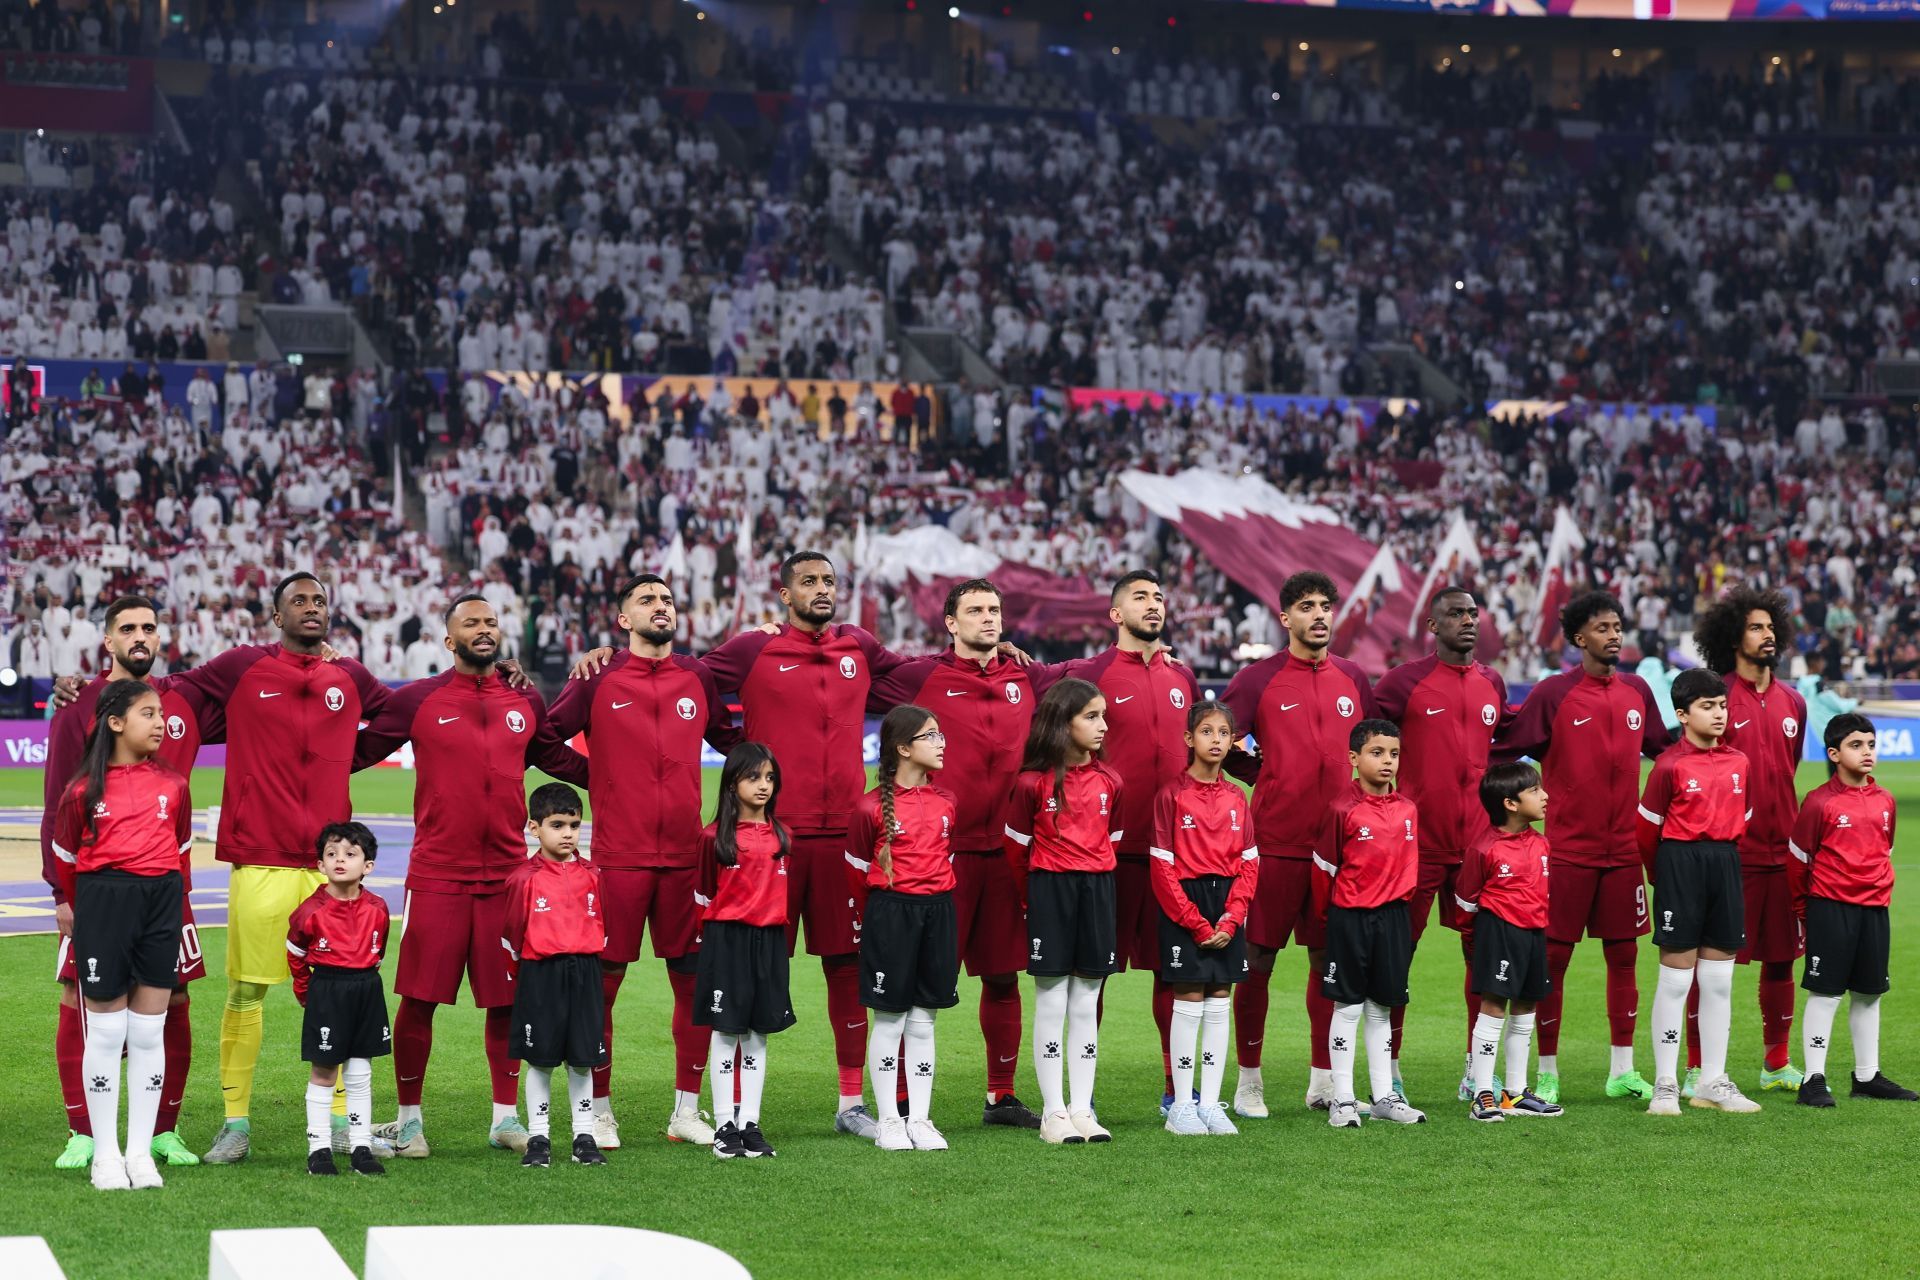 Jordan v Qatar:Final - AFC Asian Cup